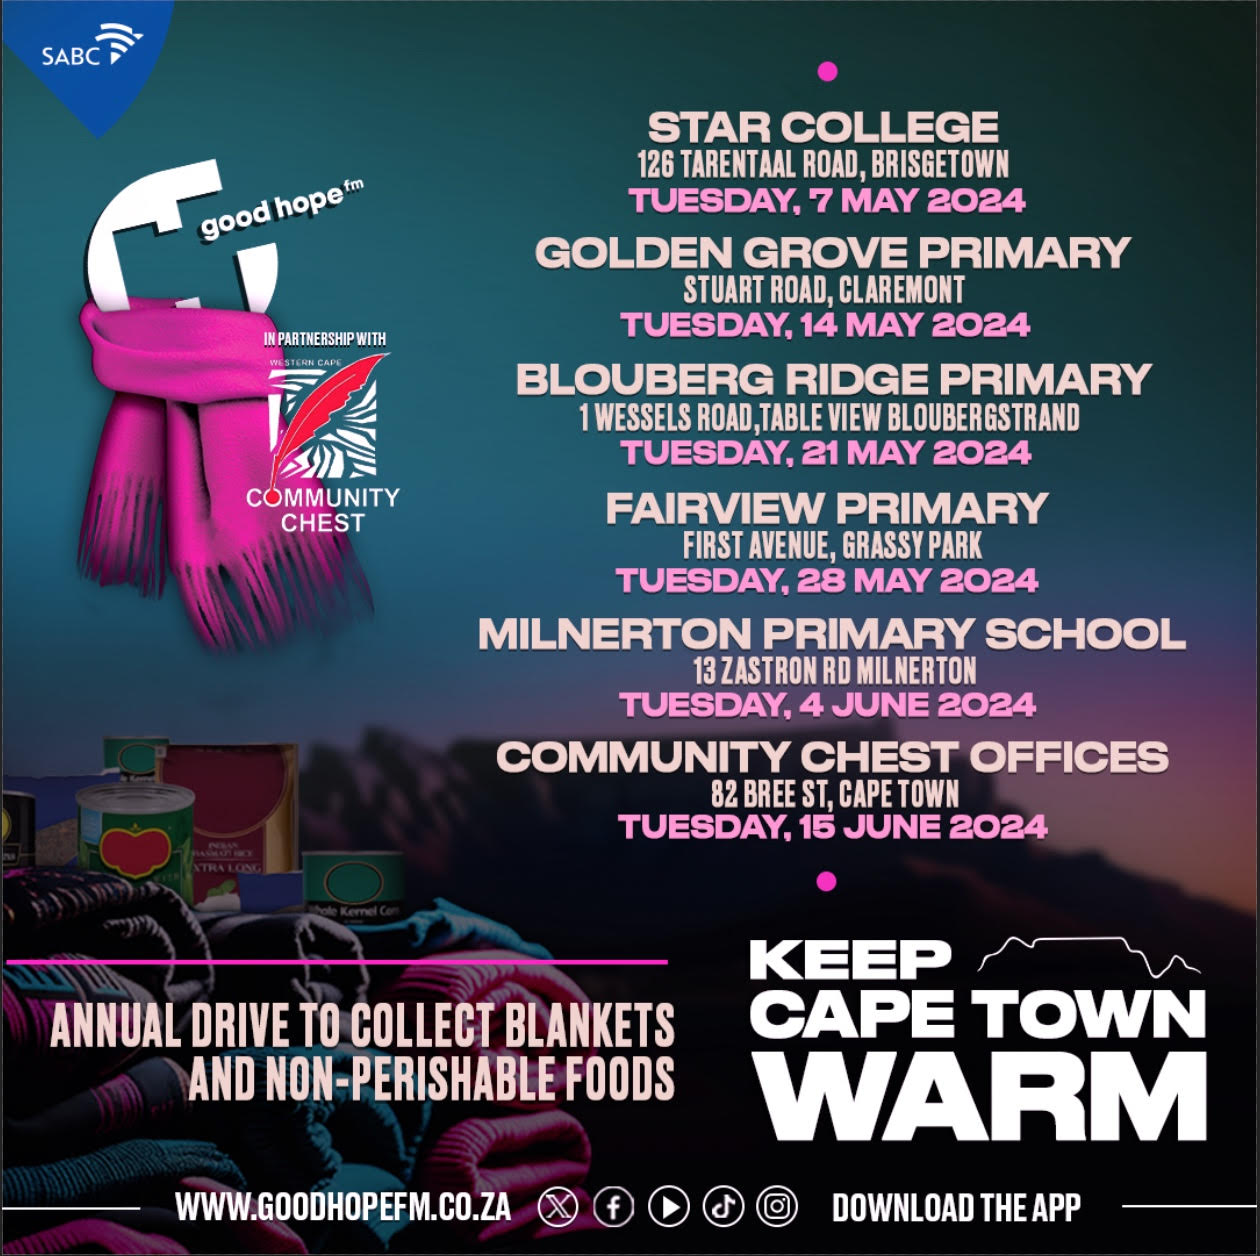 Keep Cape Town Warm at Star College Bridgetown